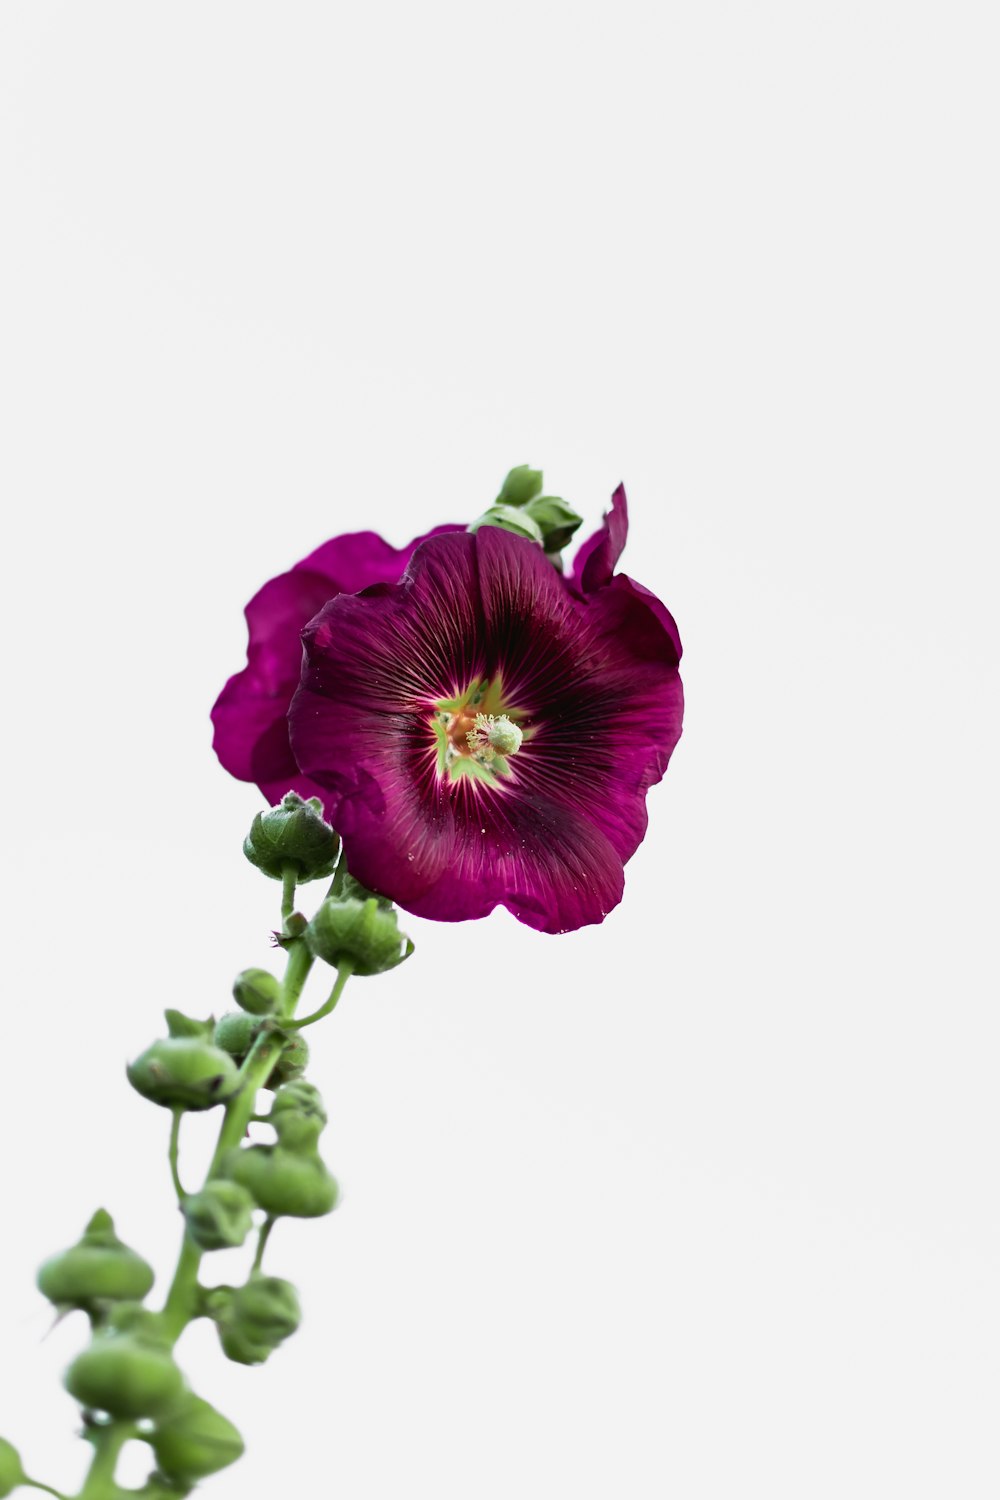 Flower Png Pictures | Download Free Images on Unsplash